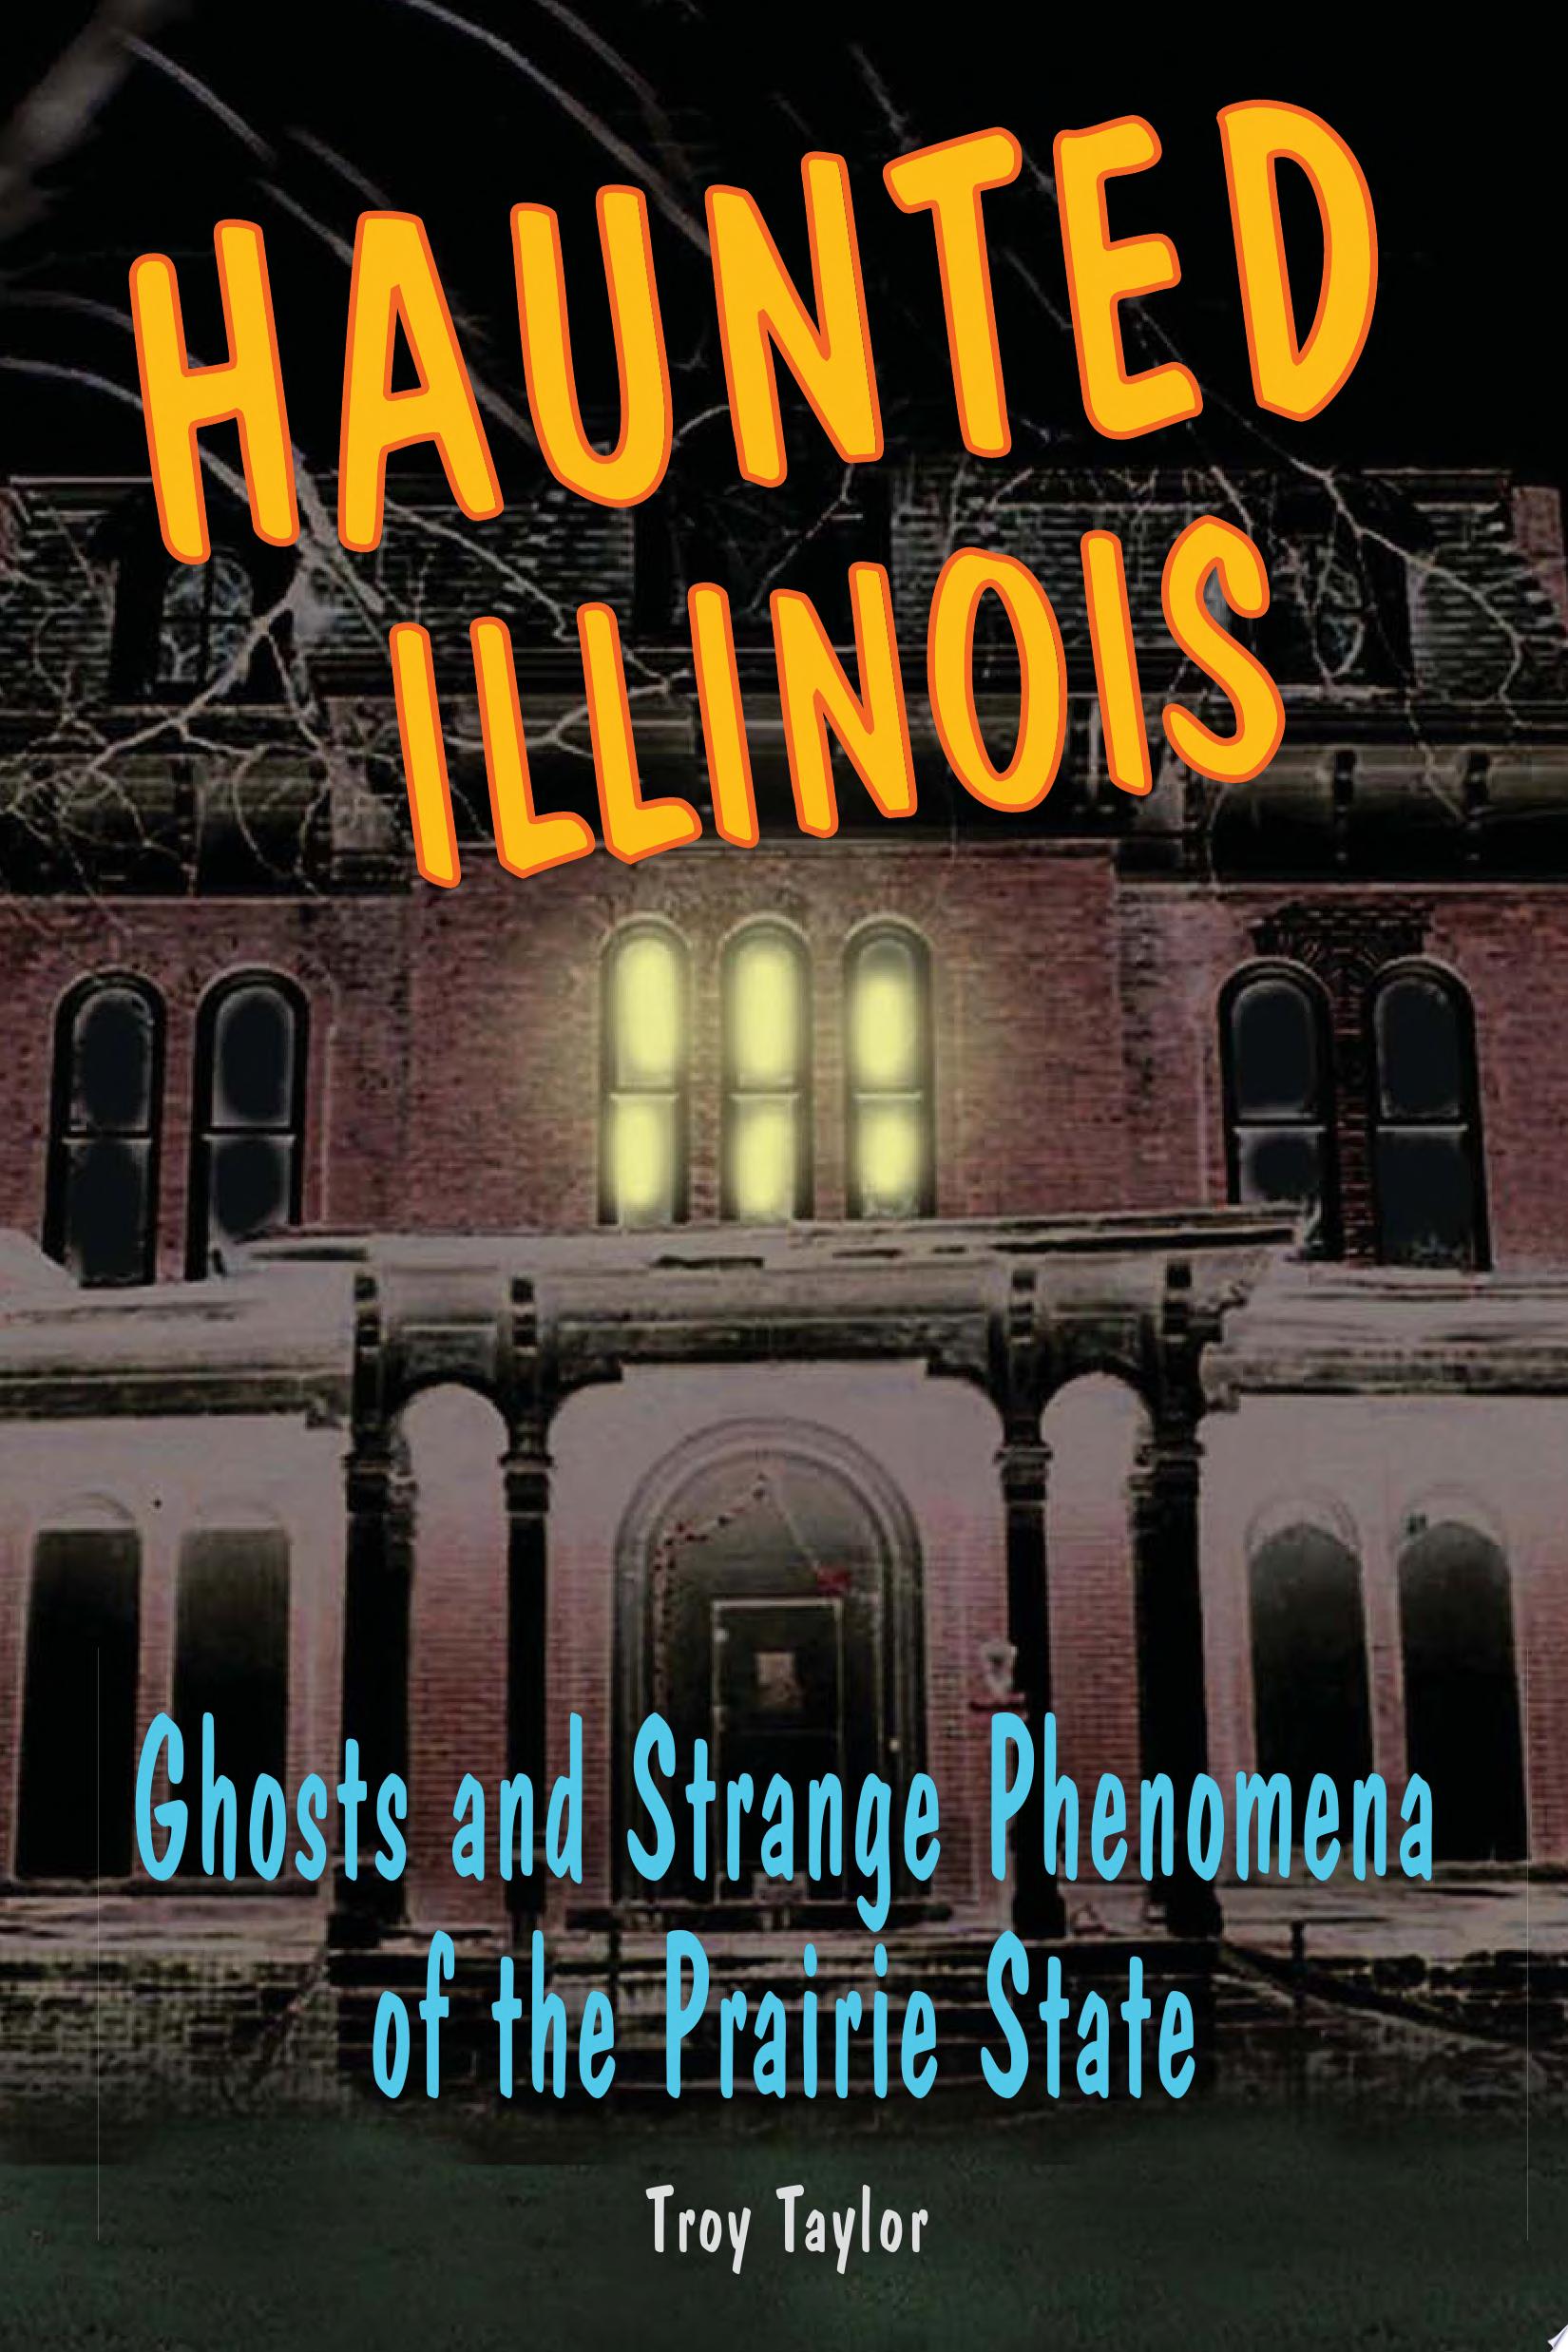 Image for "Haunted Illinois"